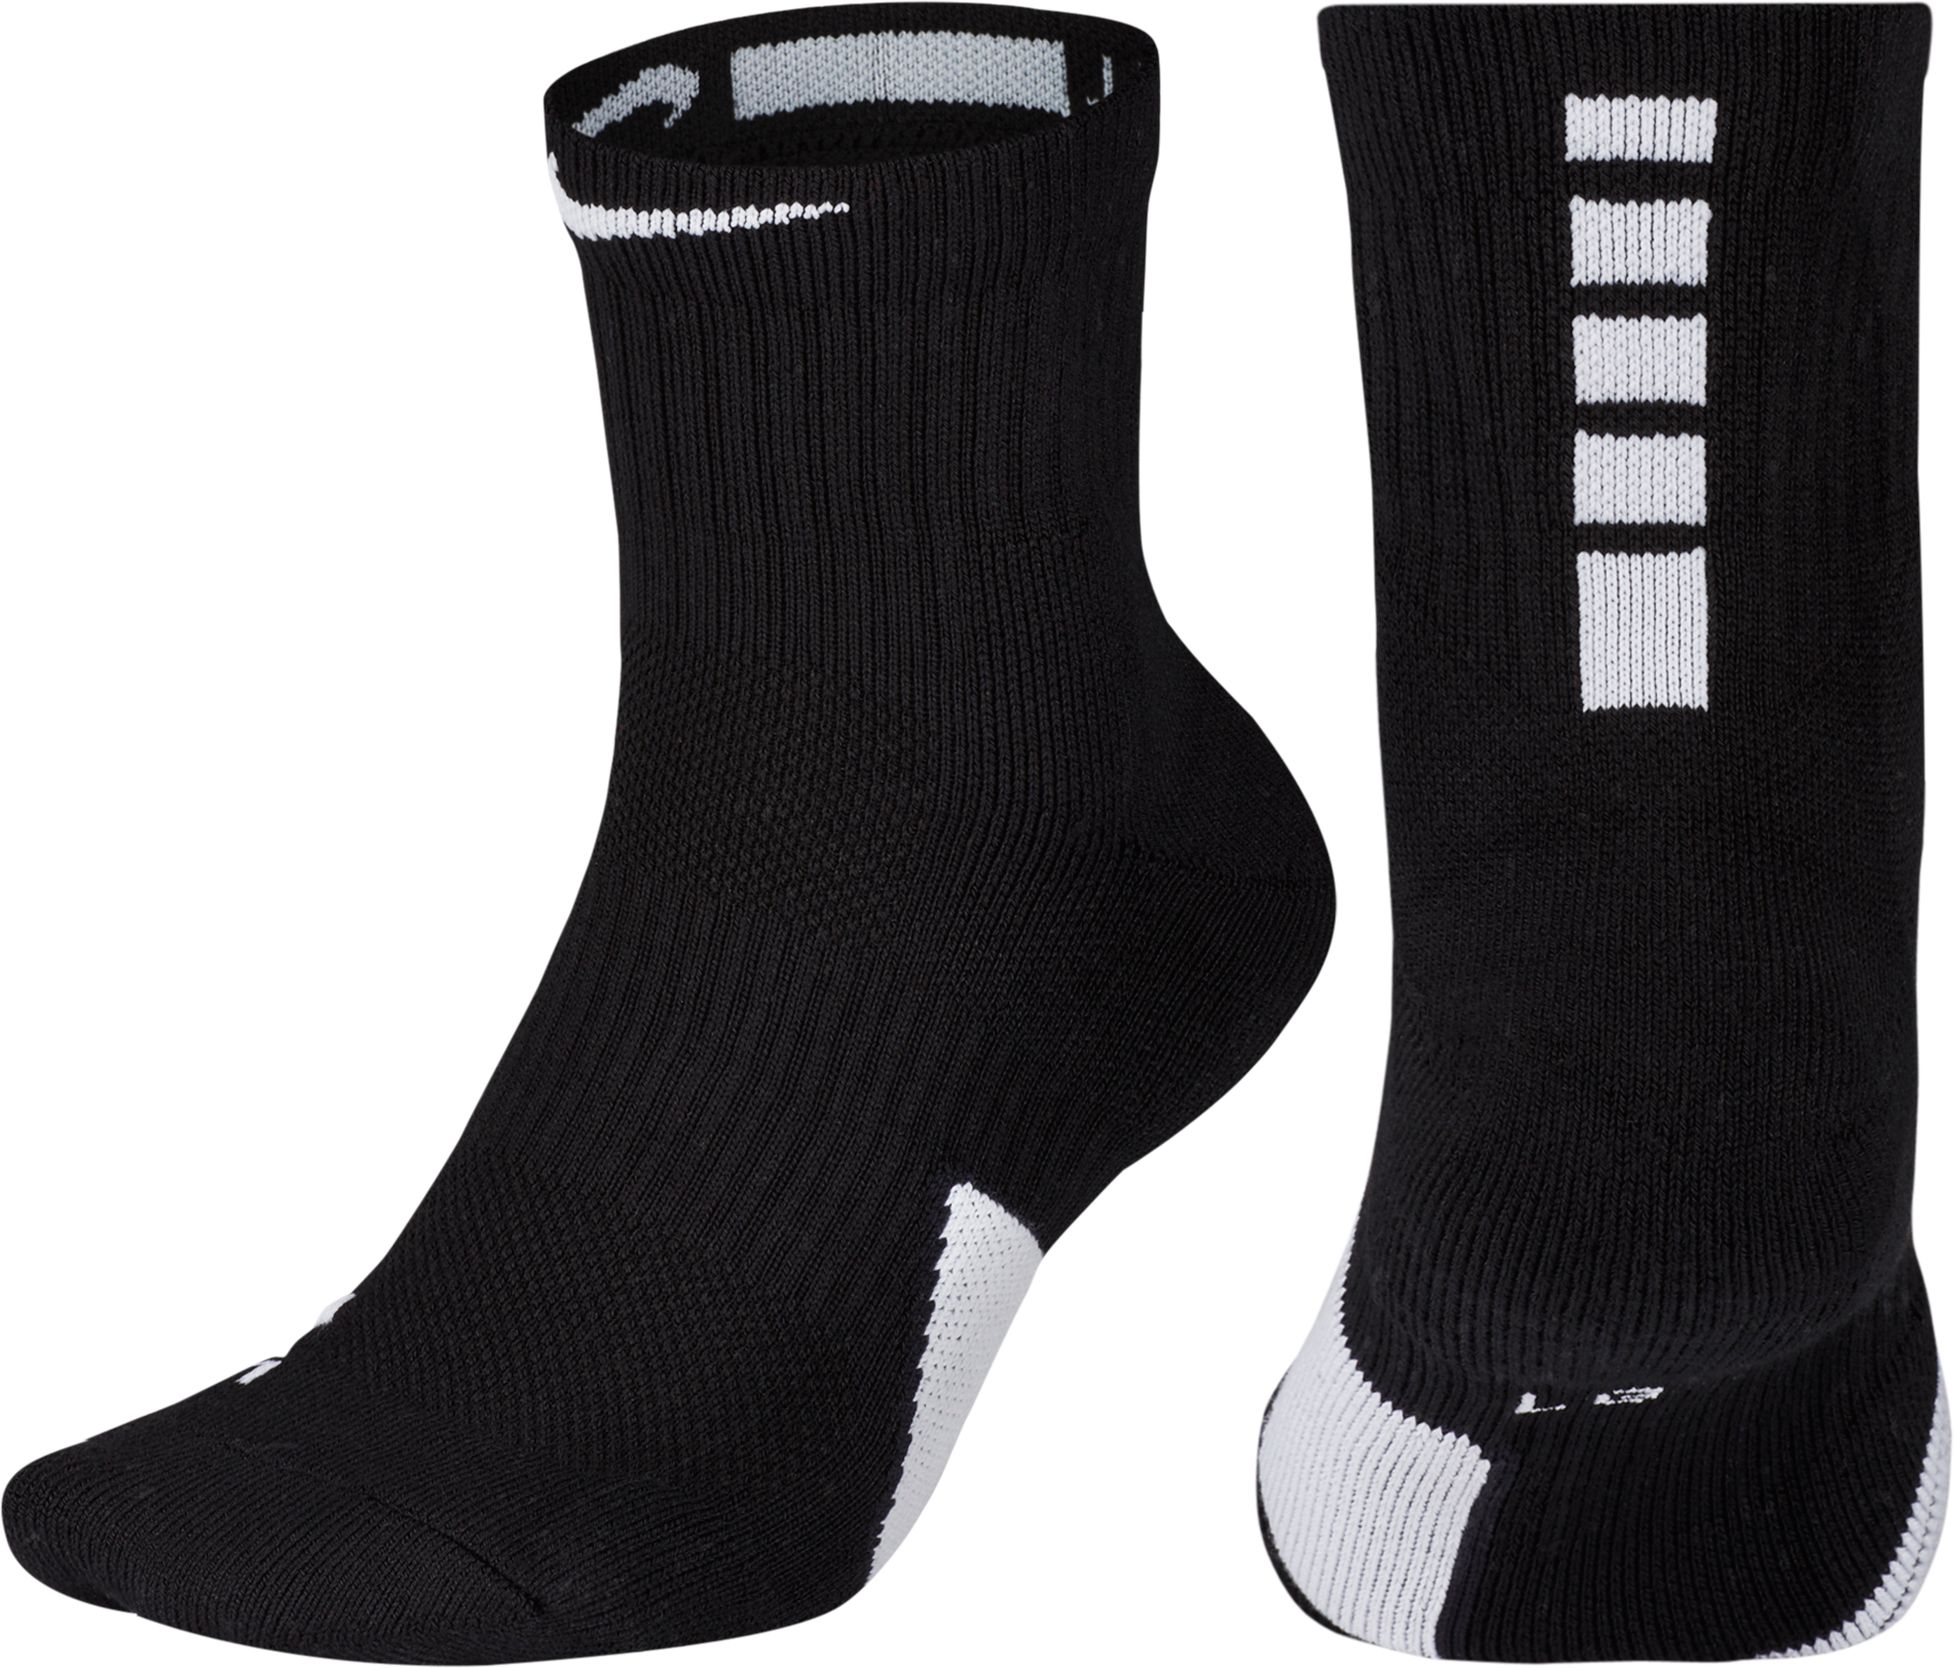 Nike Elite Basketball Ankle Socks 